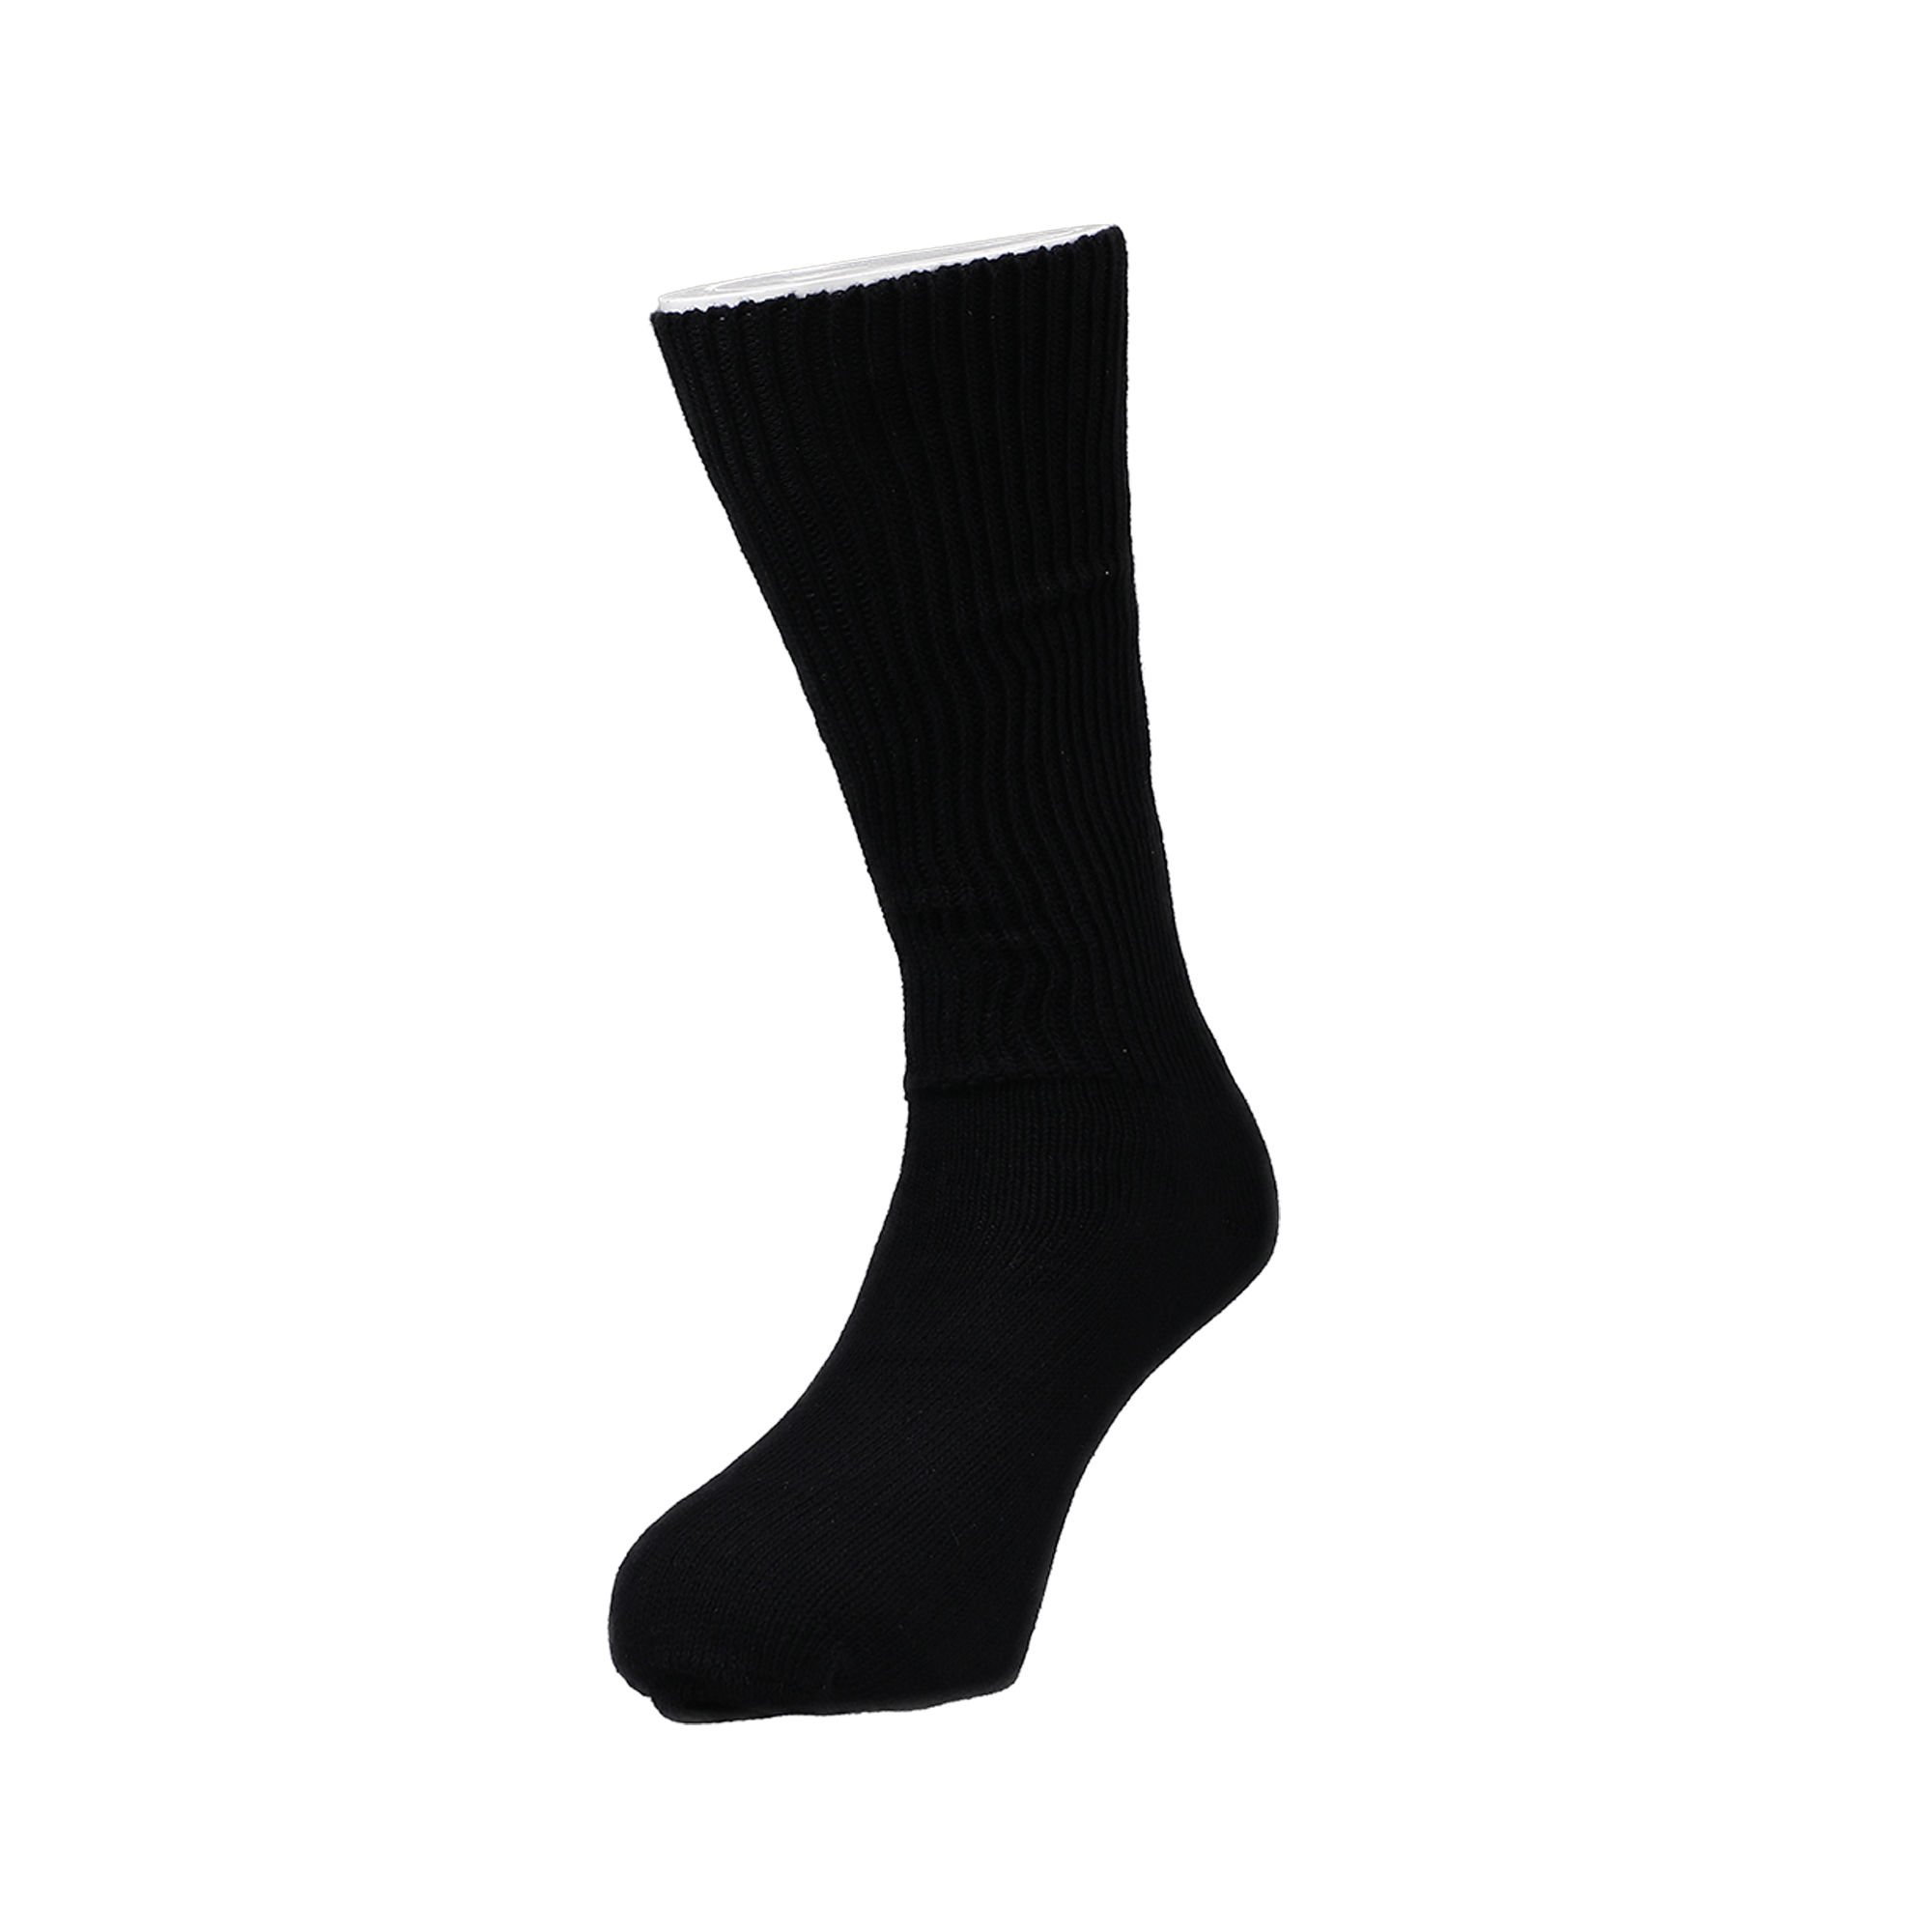 Buy Apollo Pharmacy Soft Touch Health Socks Black, 1 Pair Online